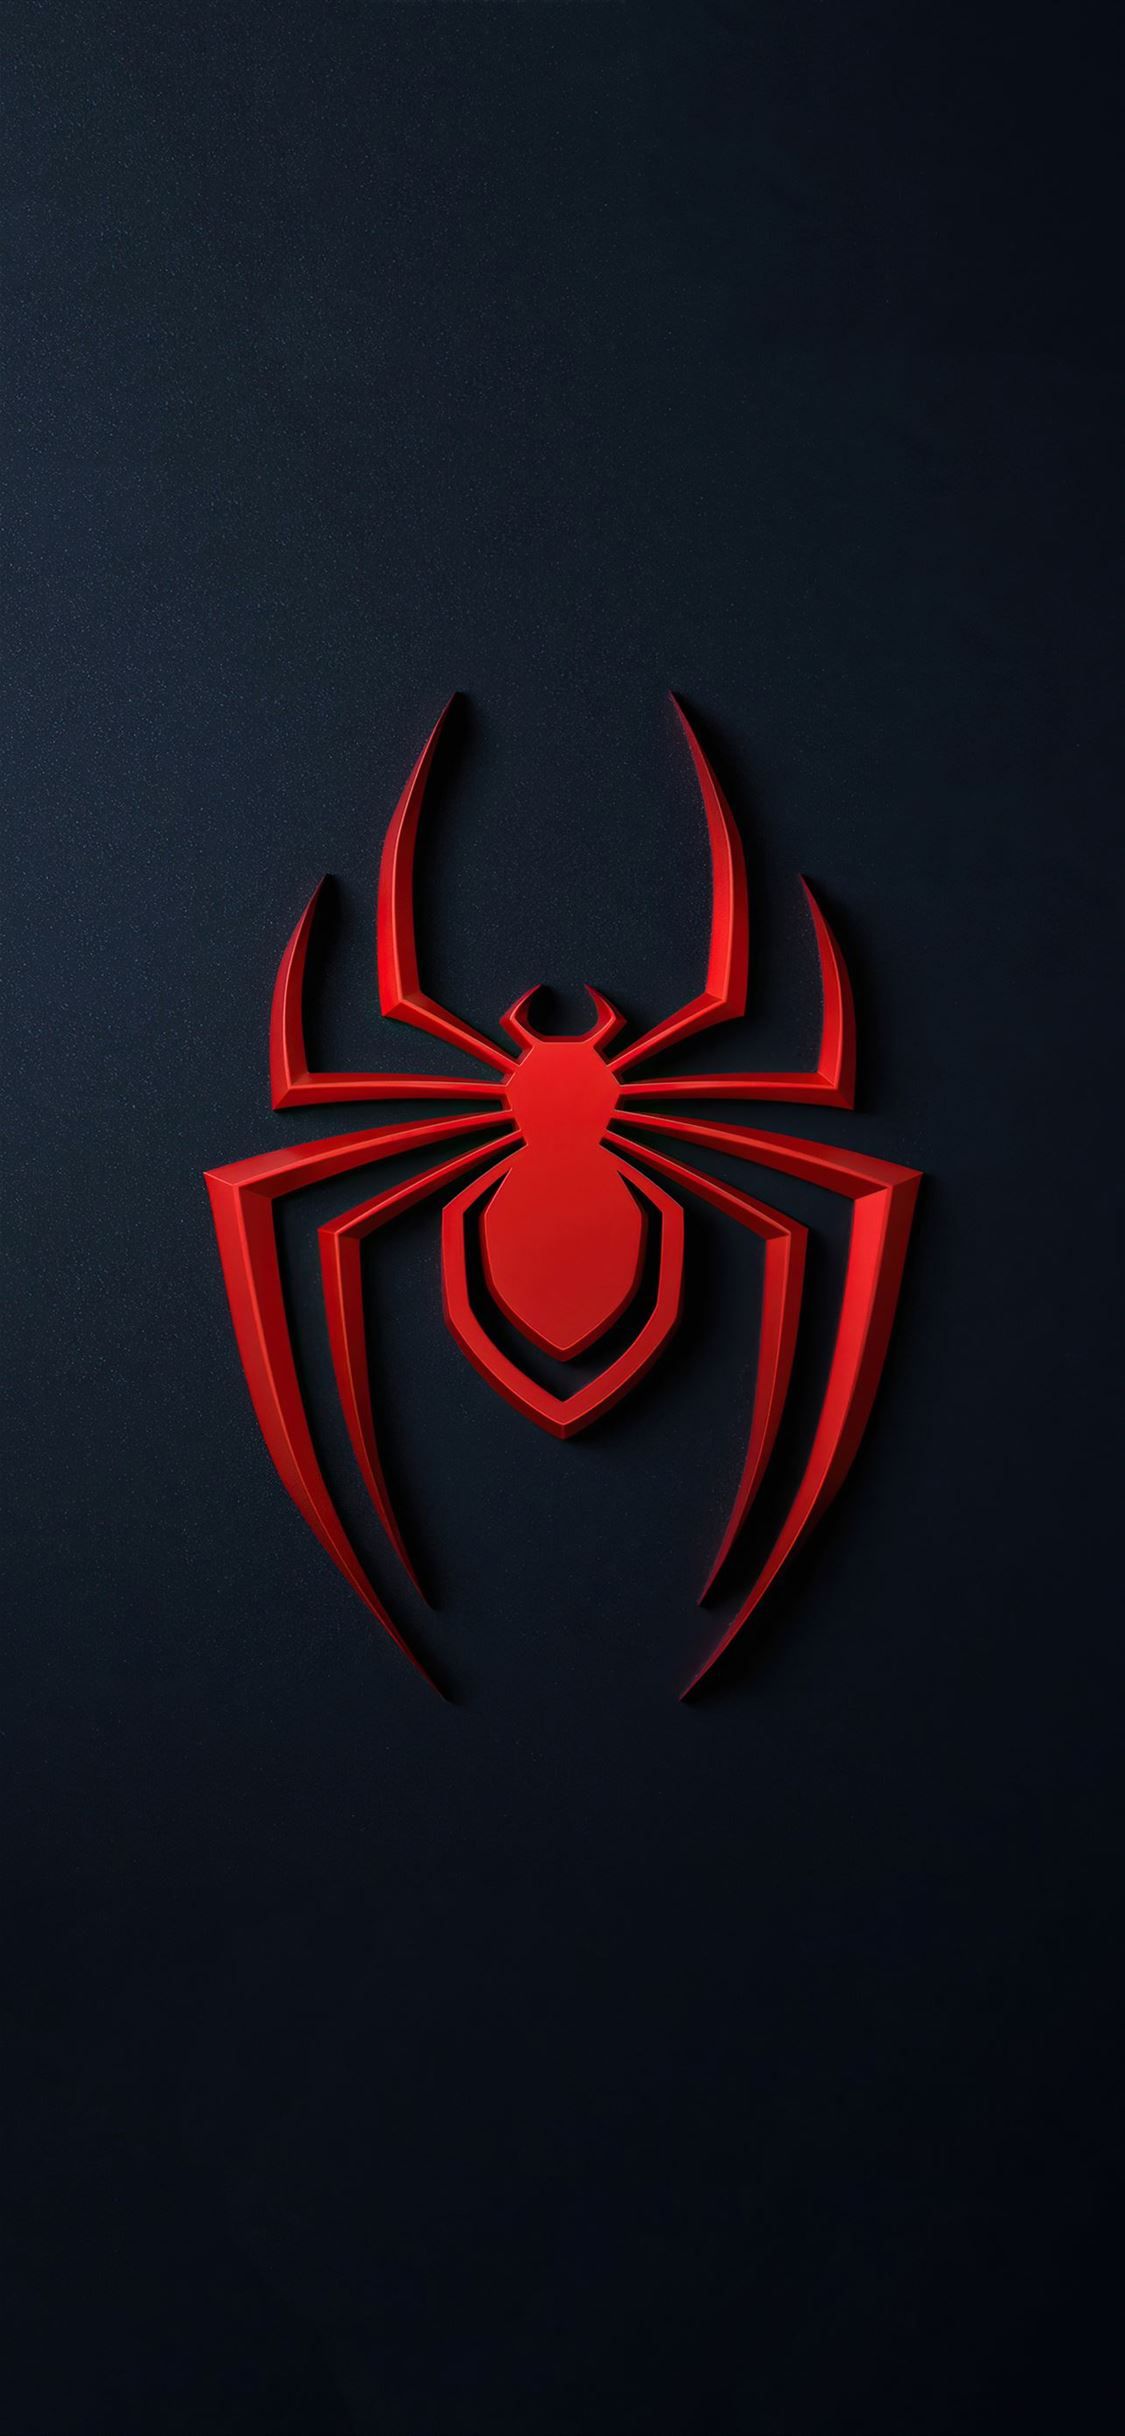 spider man miles morales logo 4k iPhone X Wallpaper Free Download